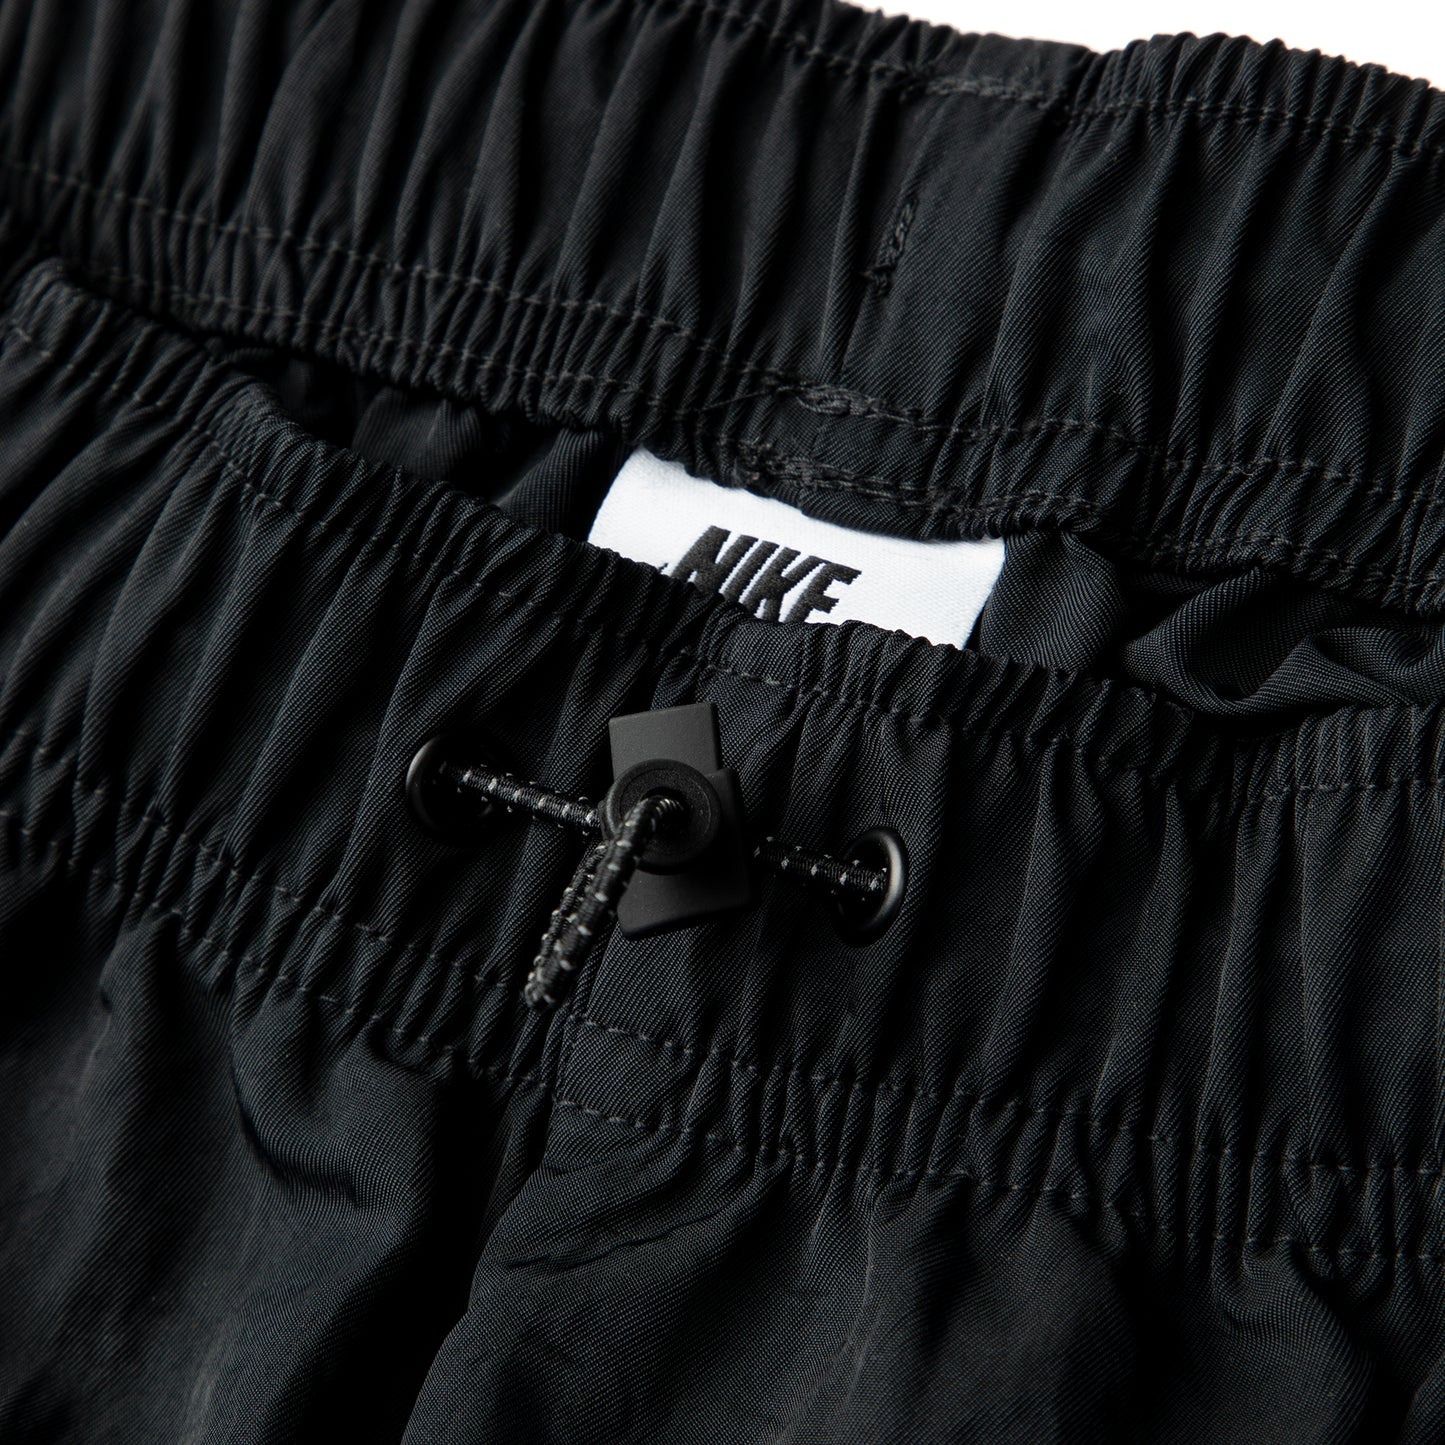 Nike Womens Sportswear Essentials Pants (Black/White)